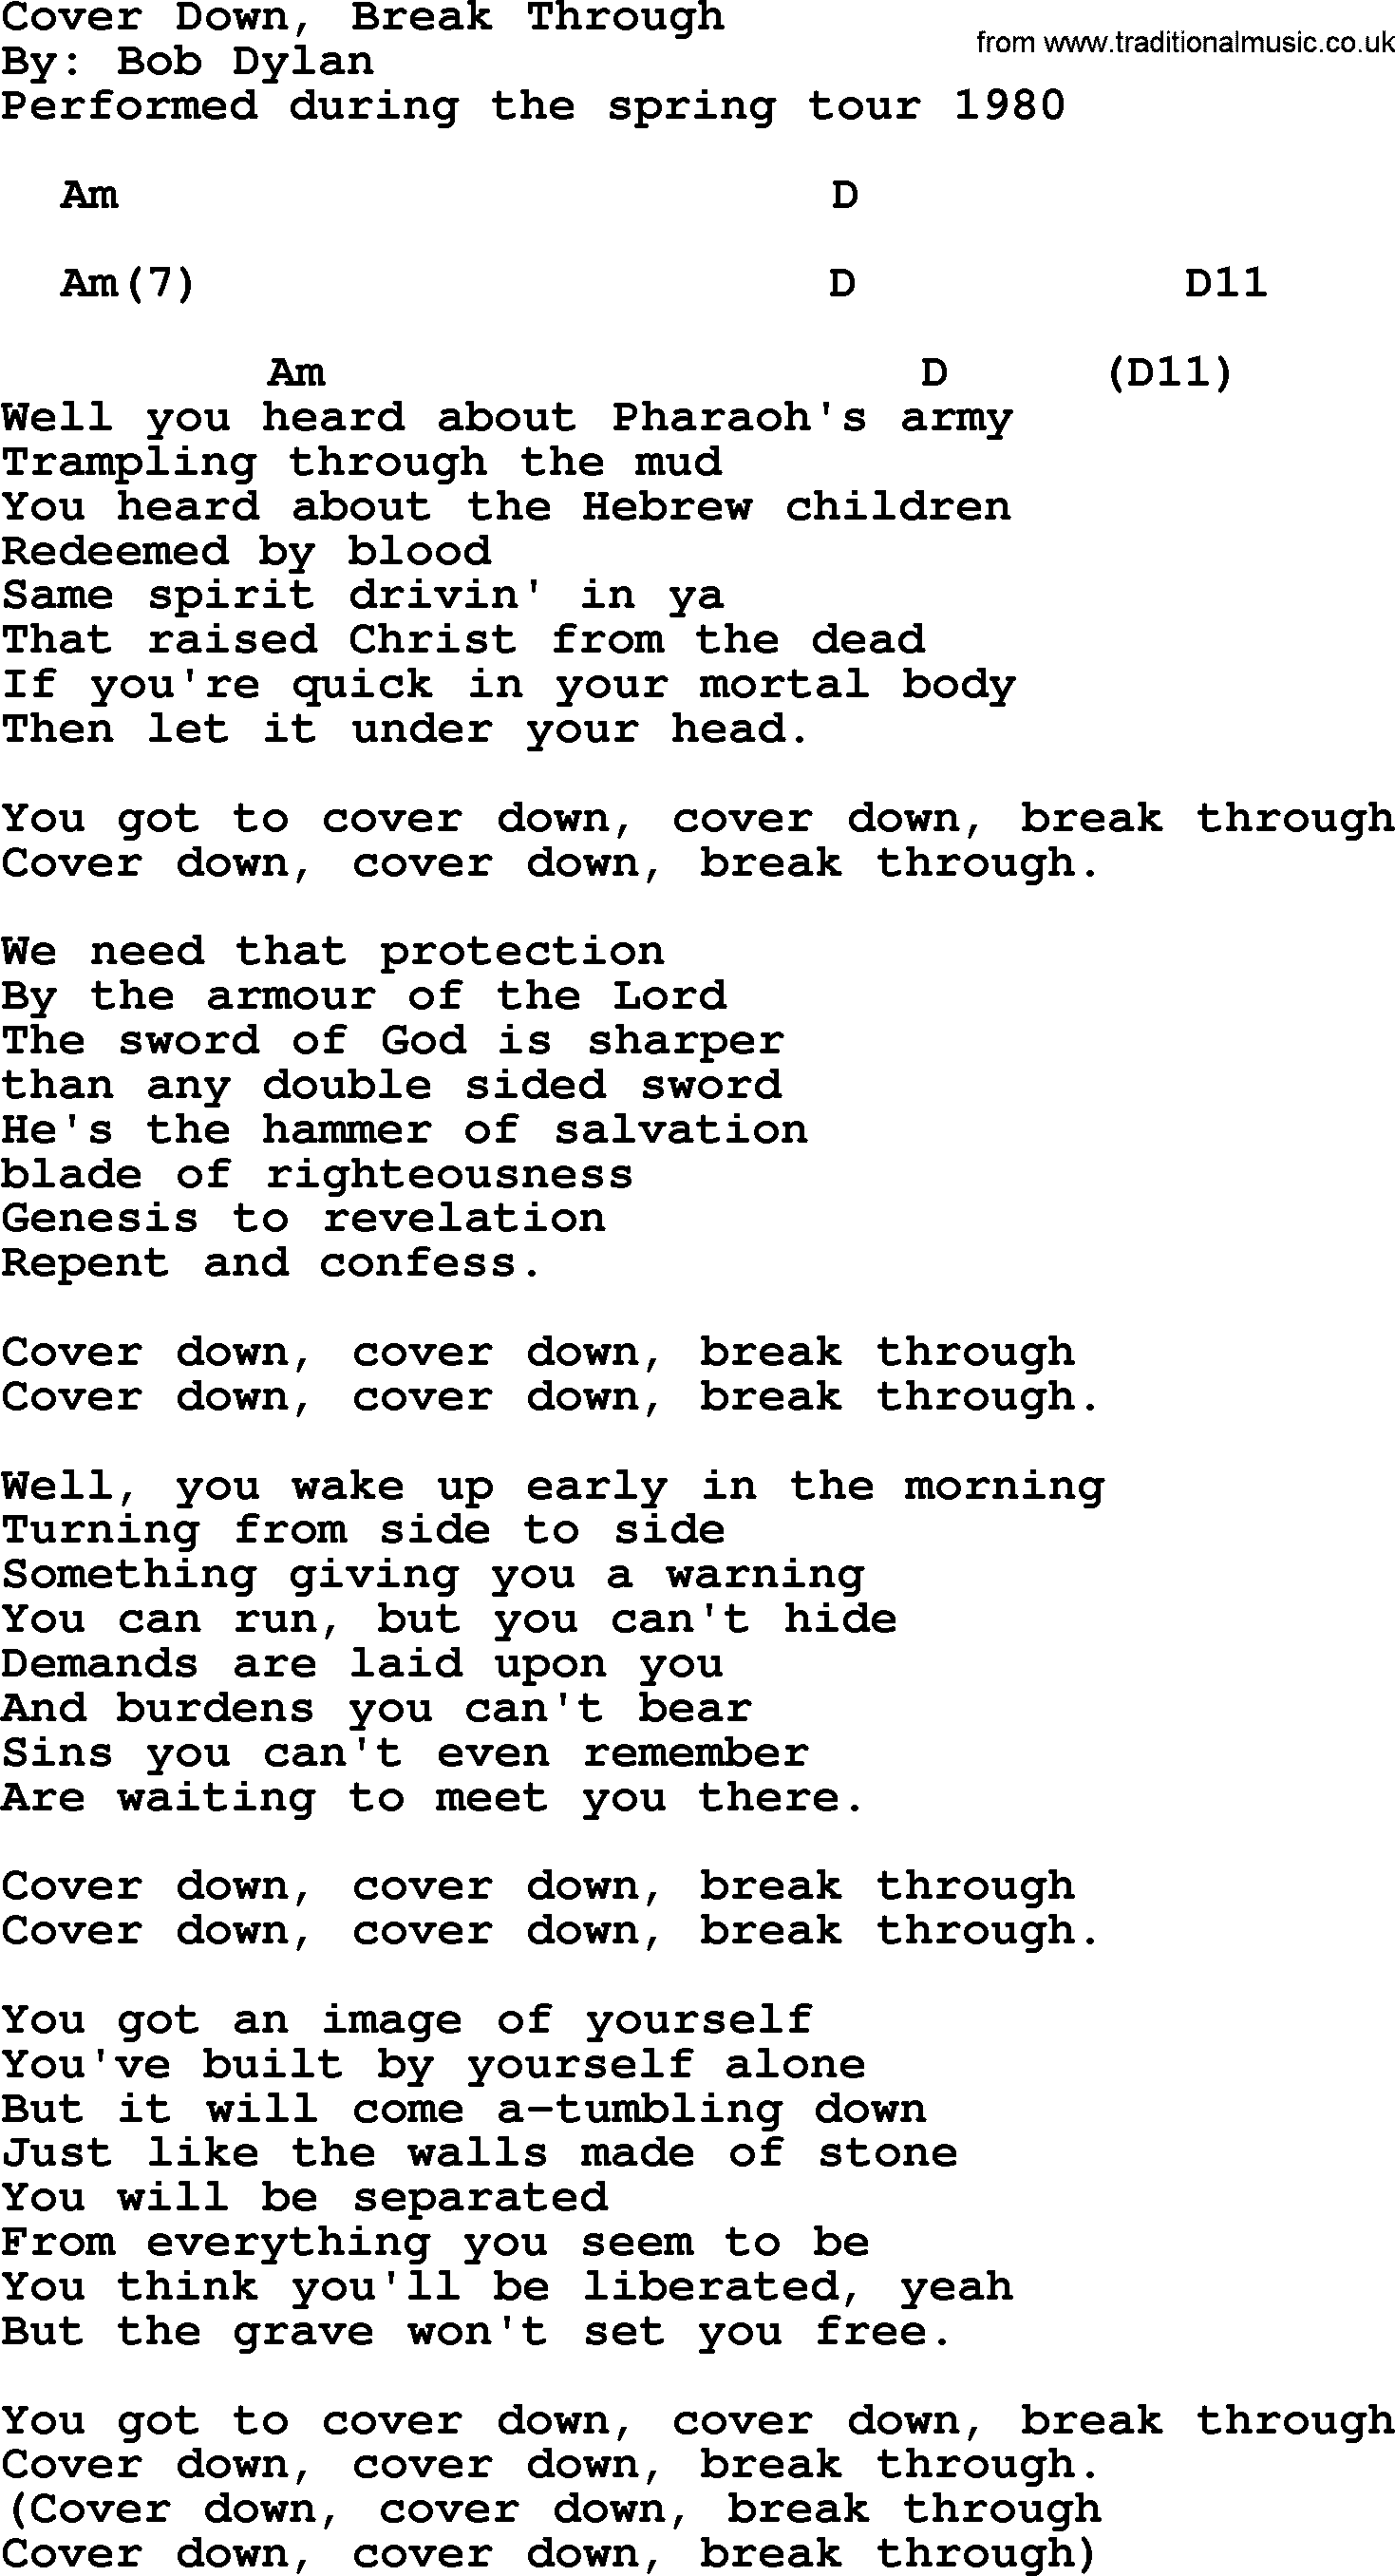 Bob Dylan song, lyrics with chords - Cover Down, Break Through